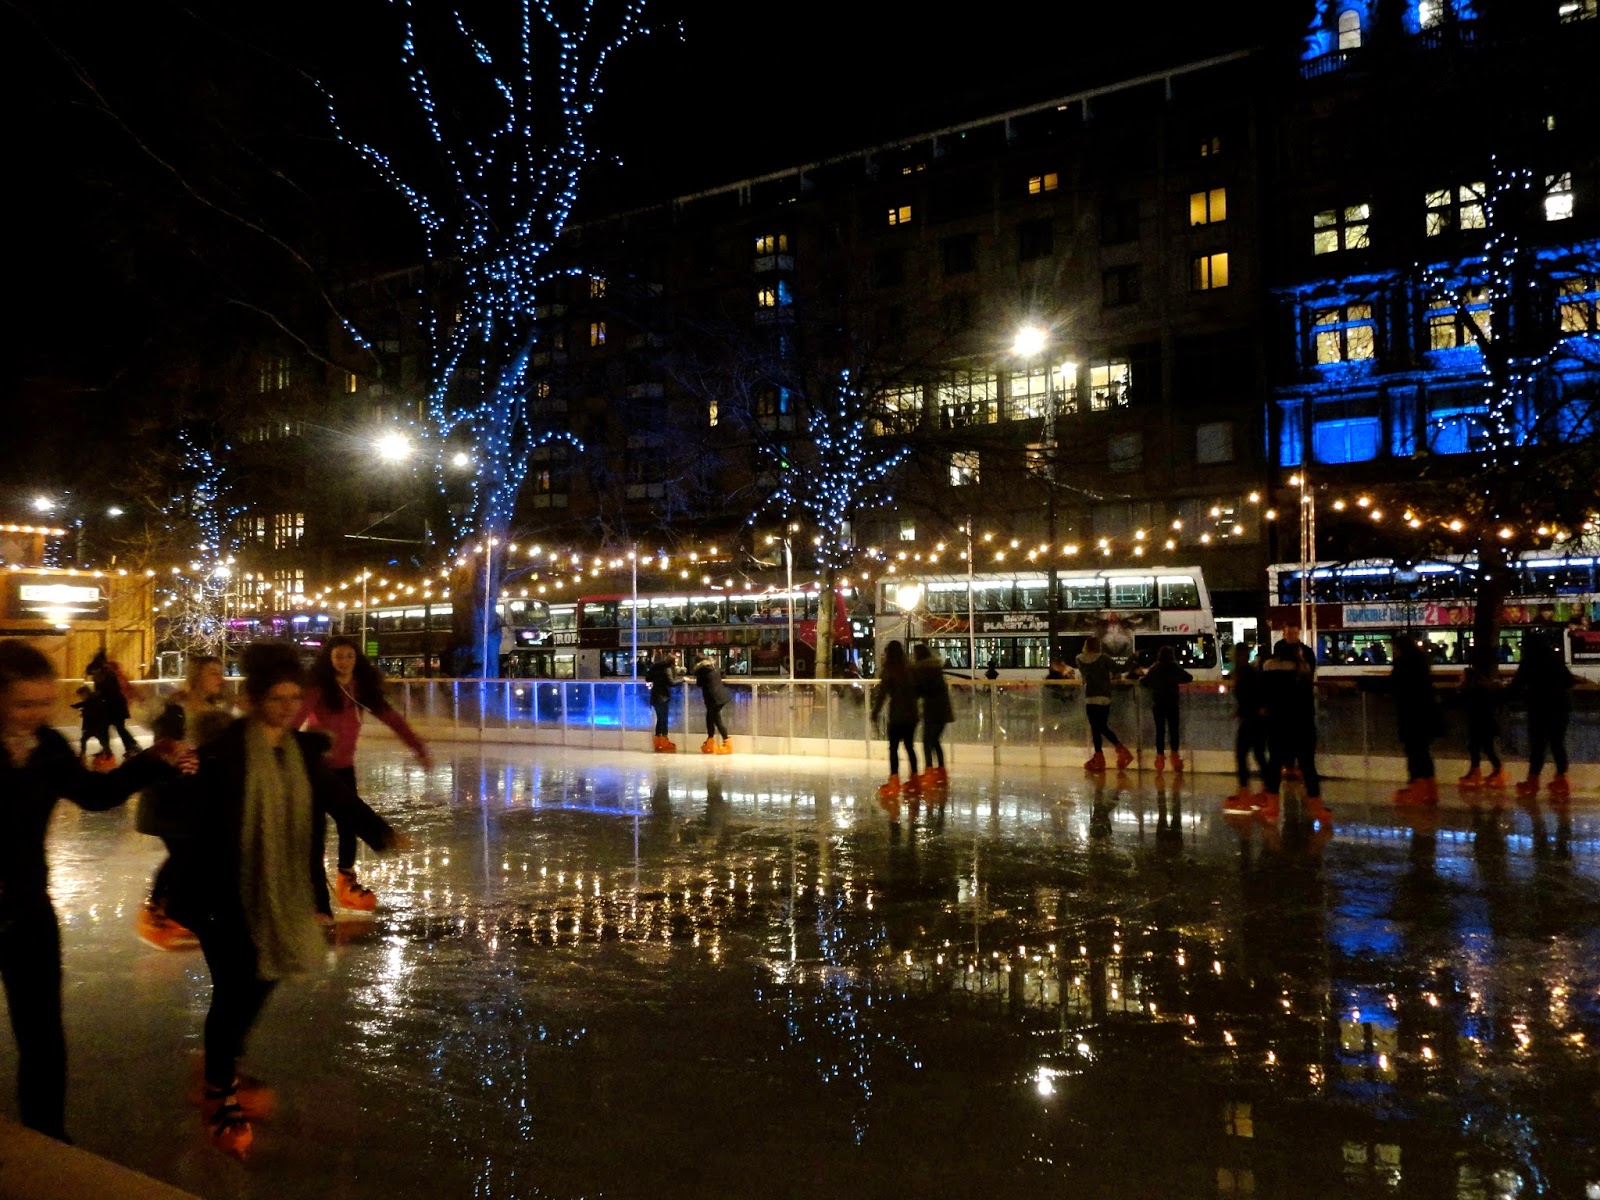 Ice skating rink in Edinburgh Winter Wonderland at Christmas in Princes Street Gardens